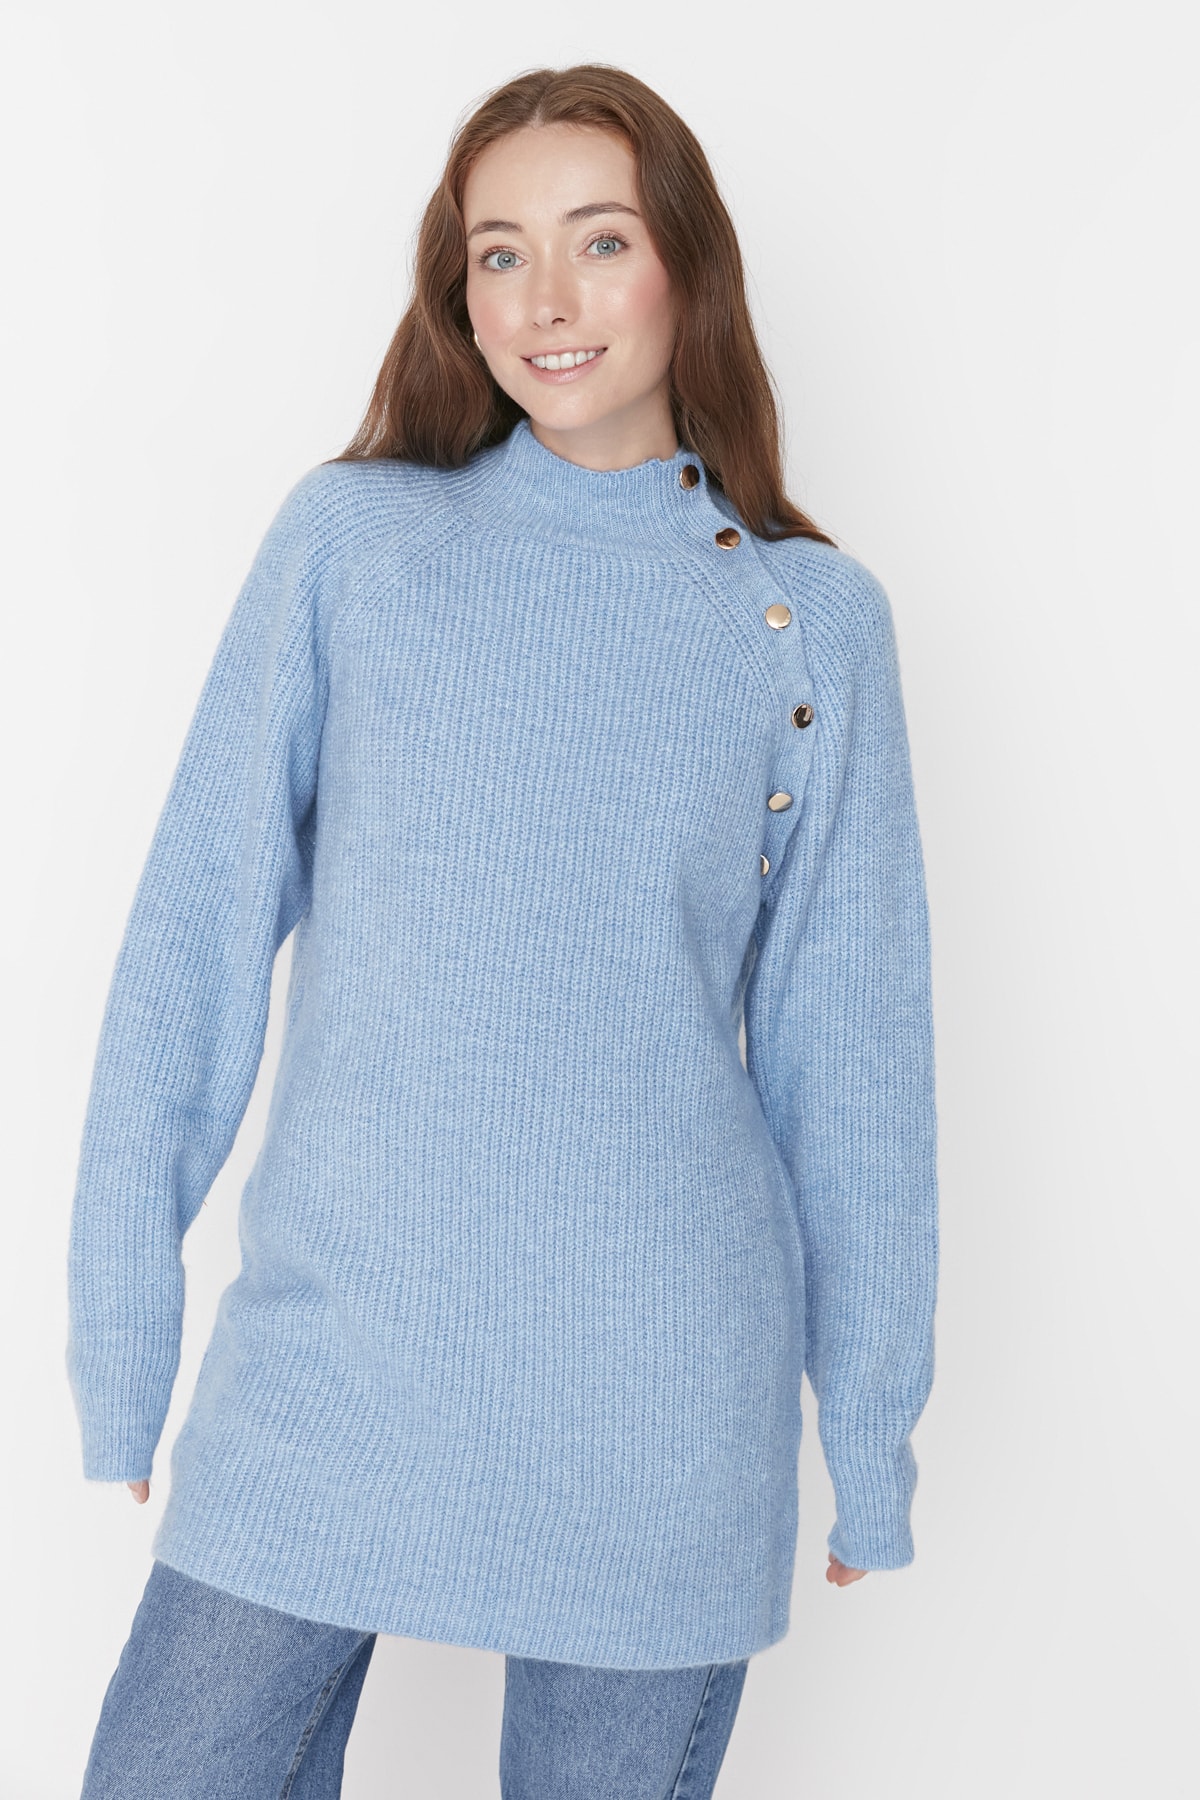 Trendyol светло синьо стендъп яка трикотаж пуловер с бутони